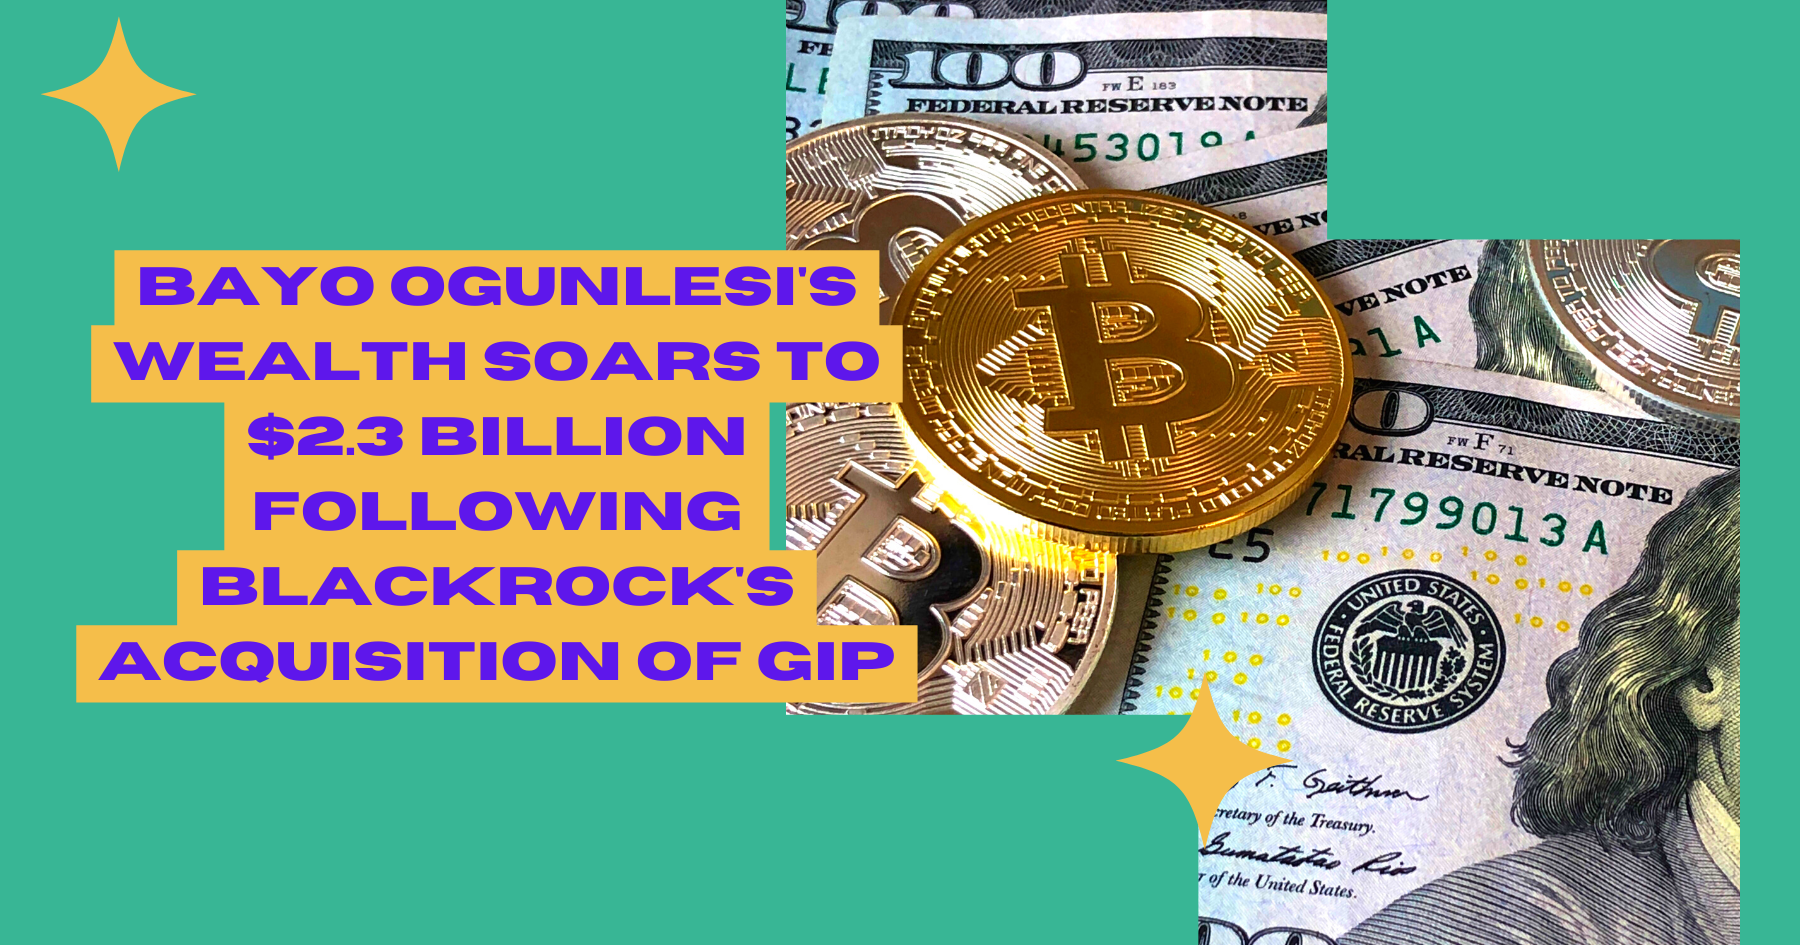 Bayo Ogunlesi's Wealth Soars to $2.3 Billion Following BlackRock's Acquisition of GIP